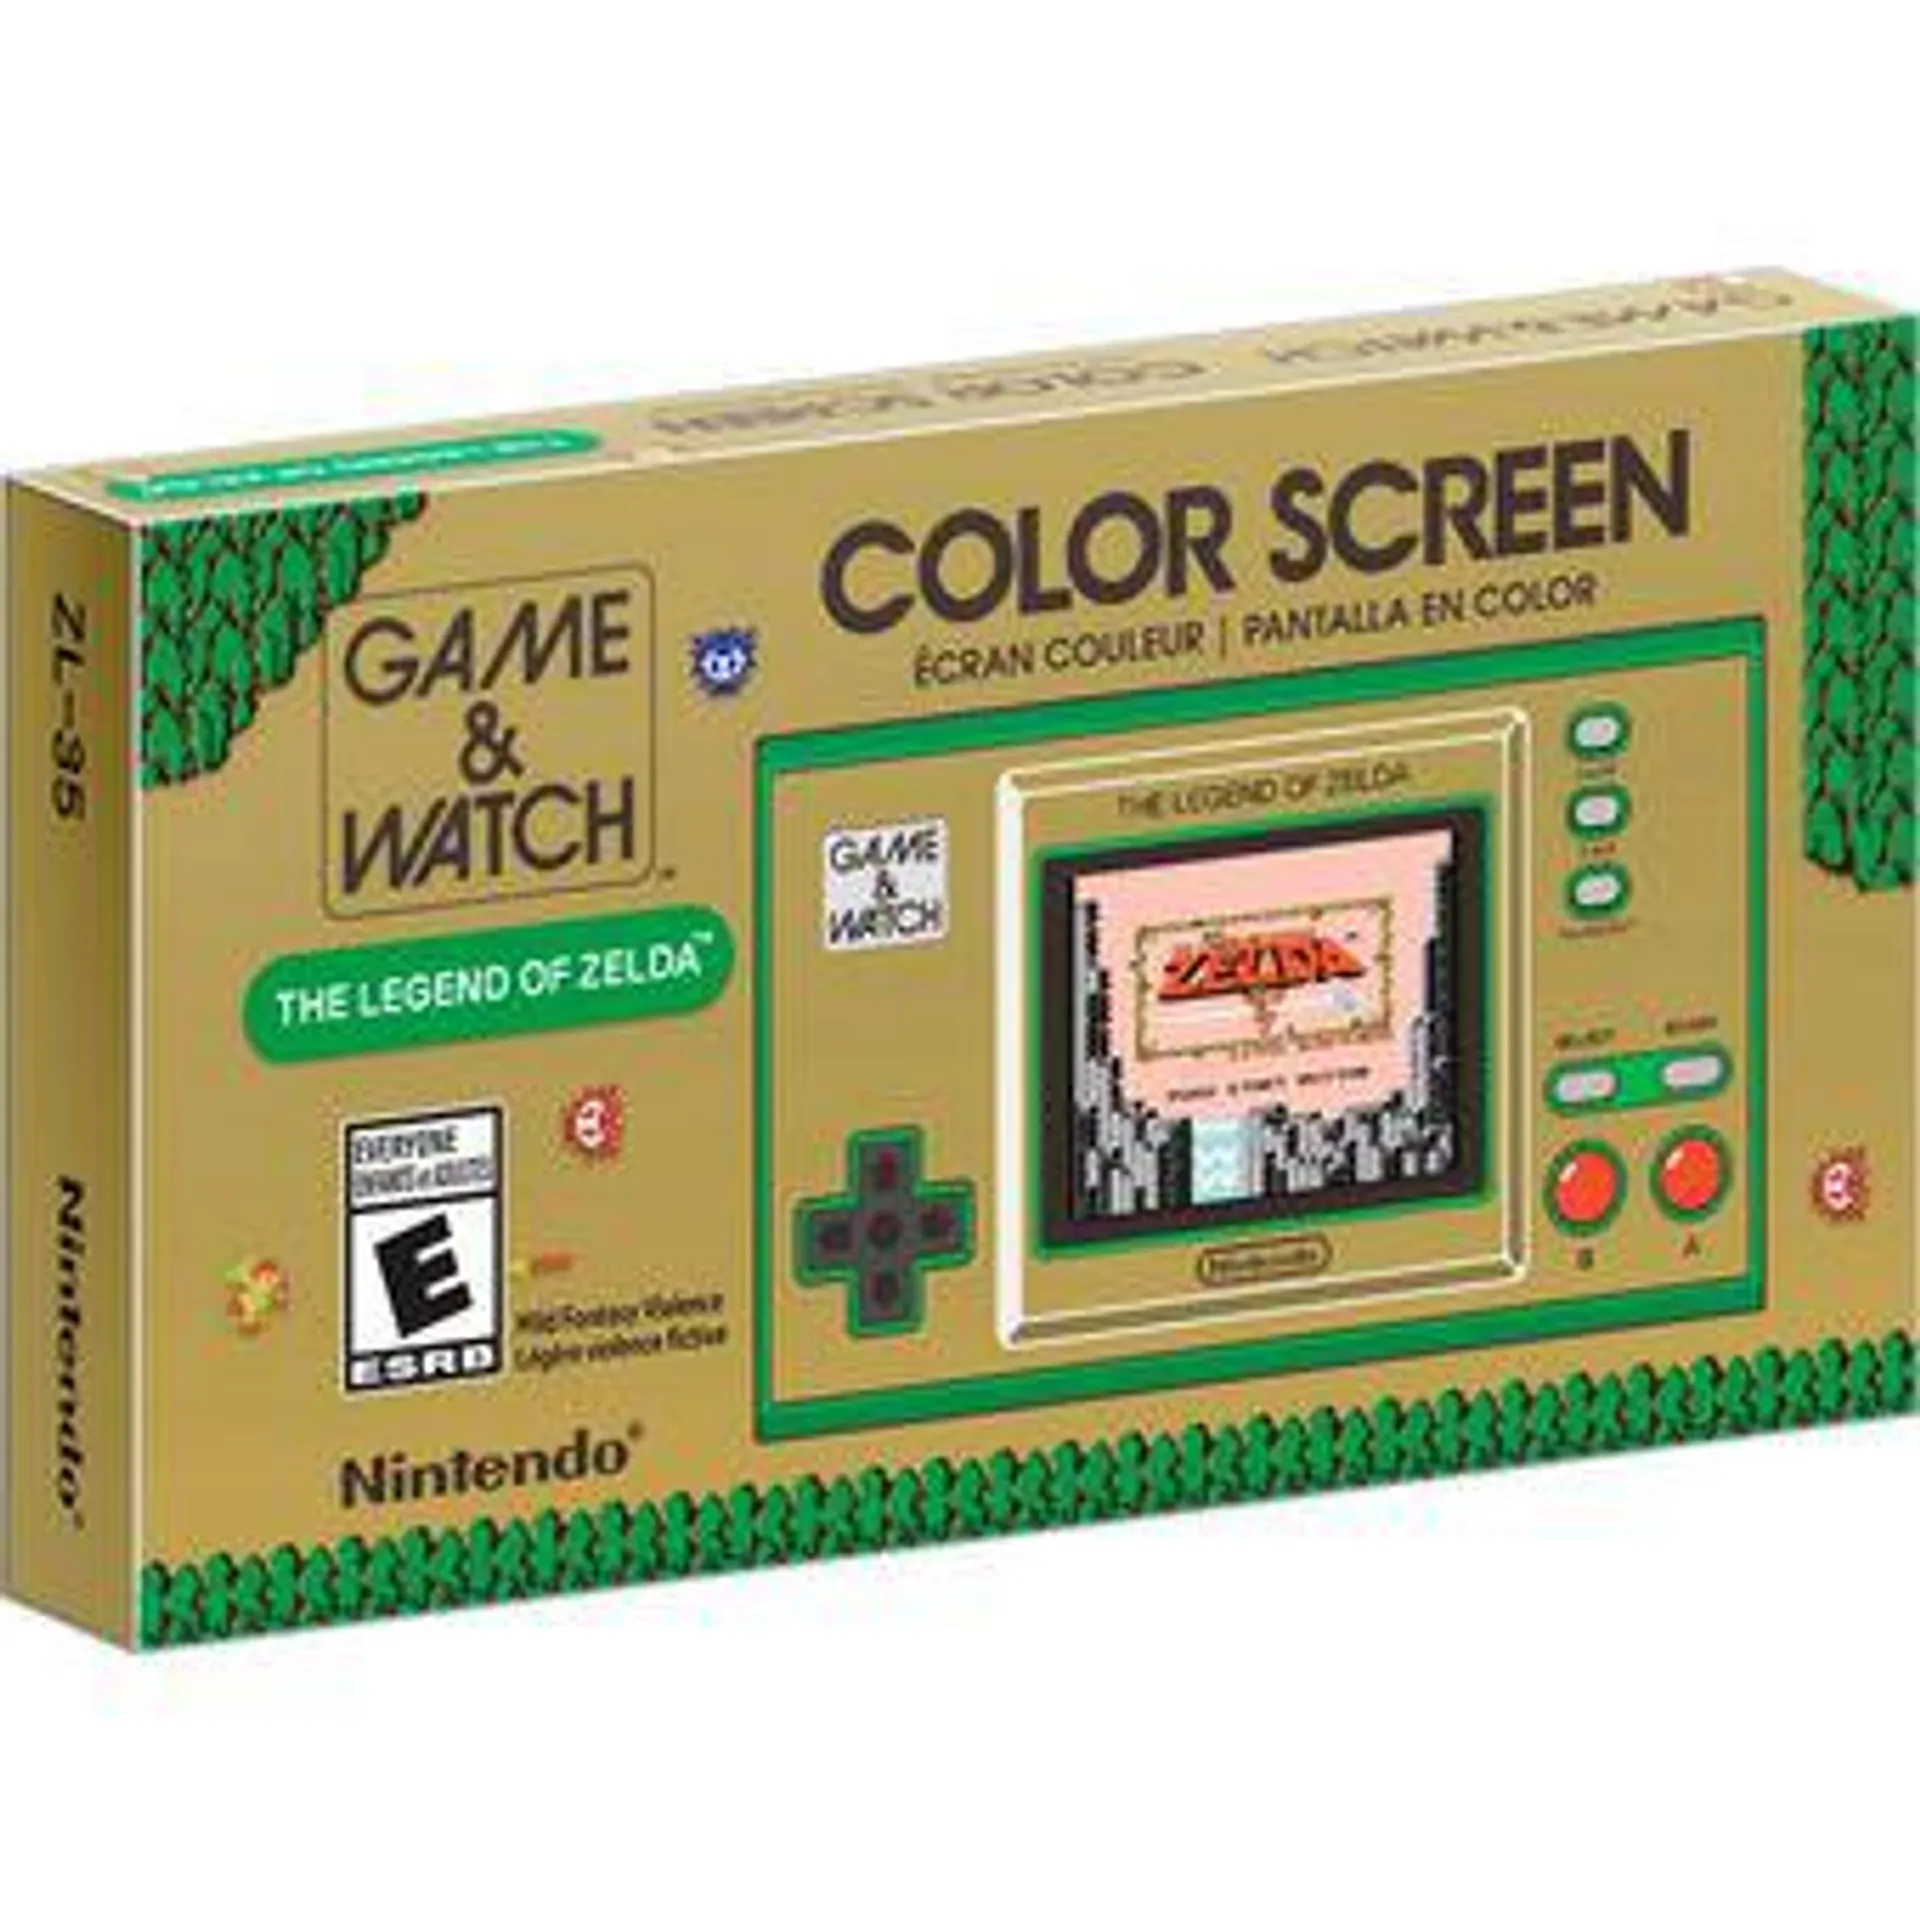 Consola Nintendo Game Watch The Legend of Zelda